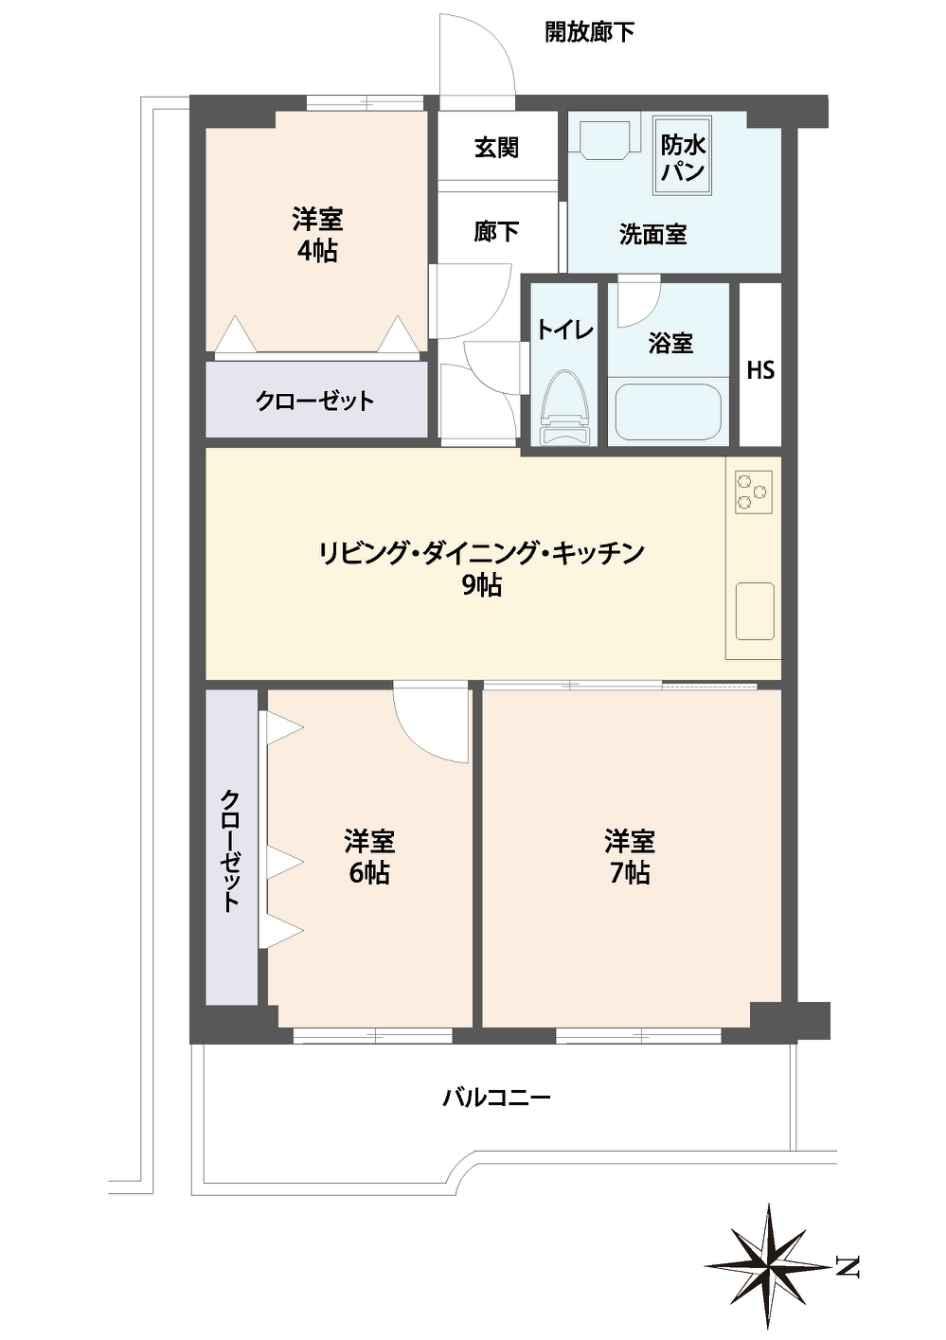 Floor plan. 3LDK, Price 14.9 million yen, Footprint 57.6 sq m , Balcony area 8 sq m